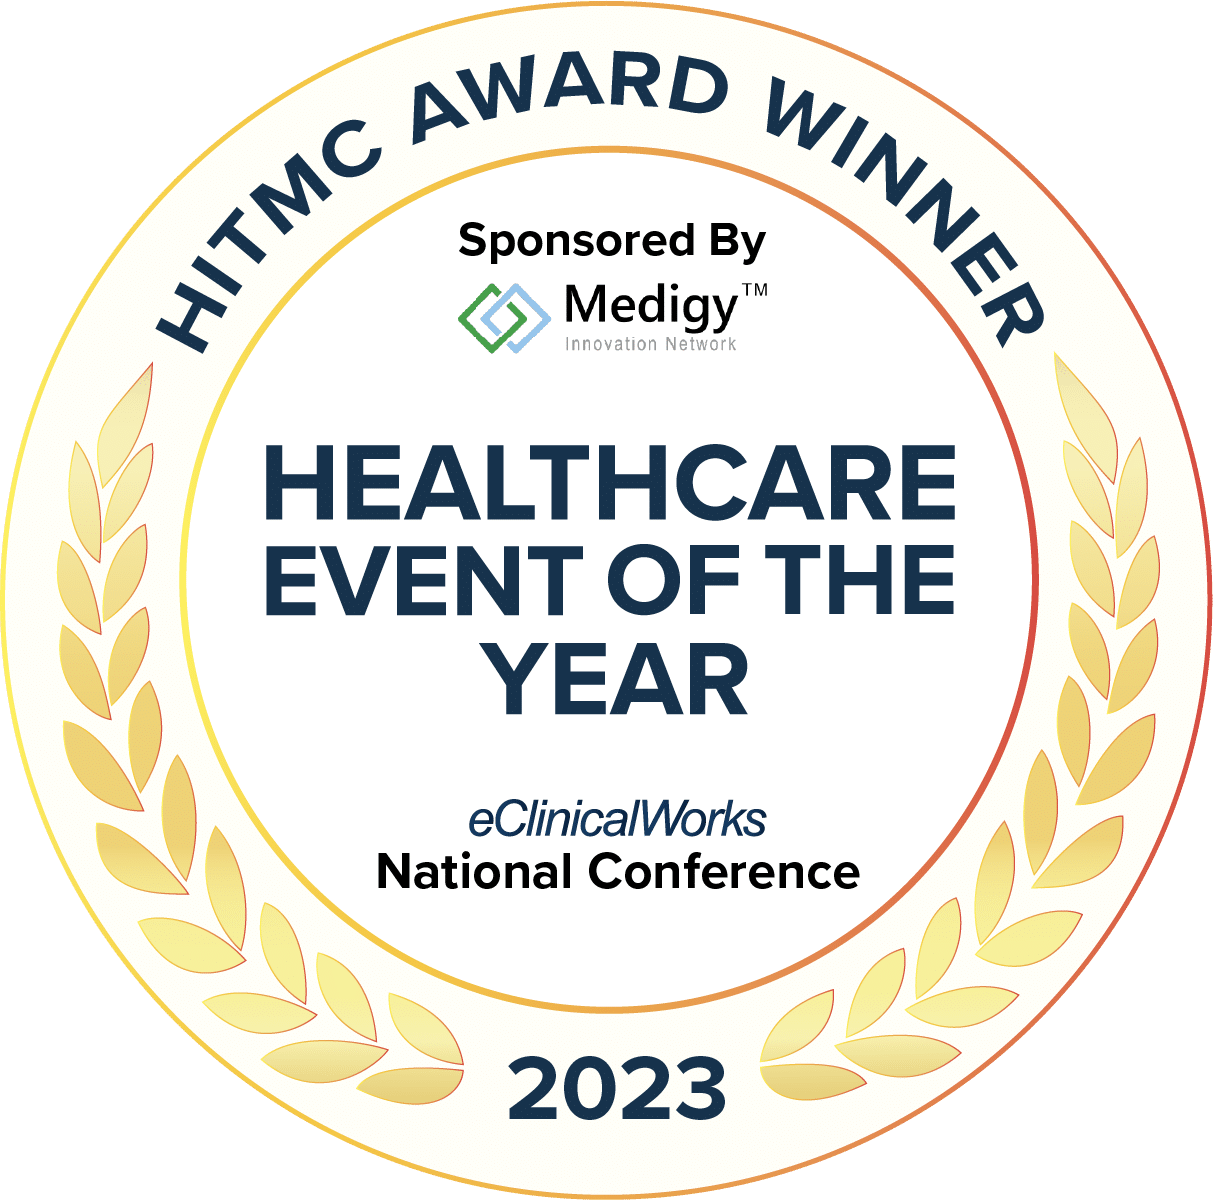 HITMC Award winner Custom Badge - Healthare Event of the Year